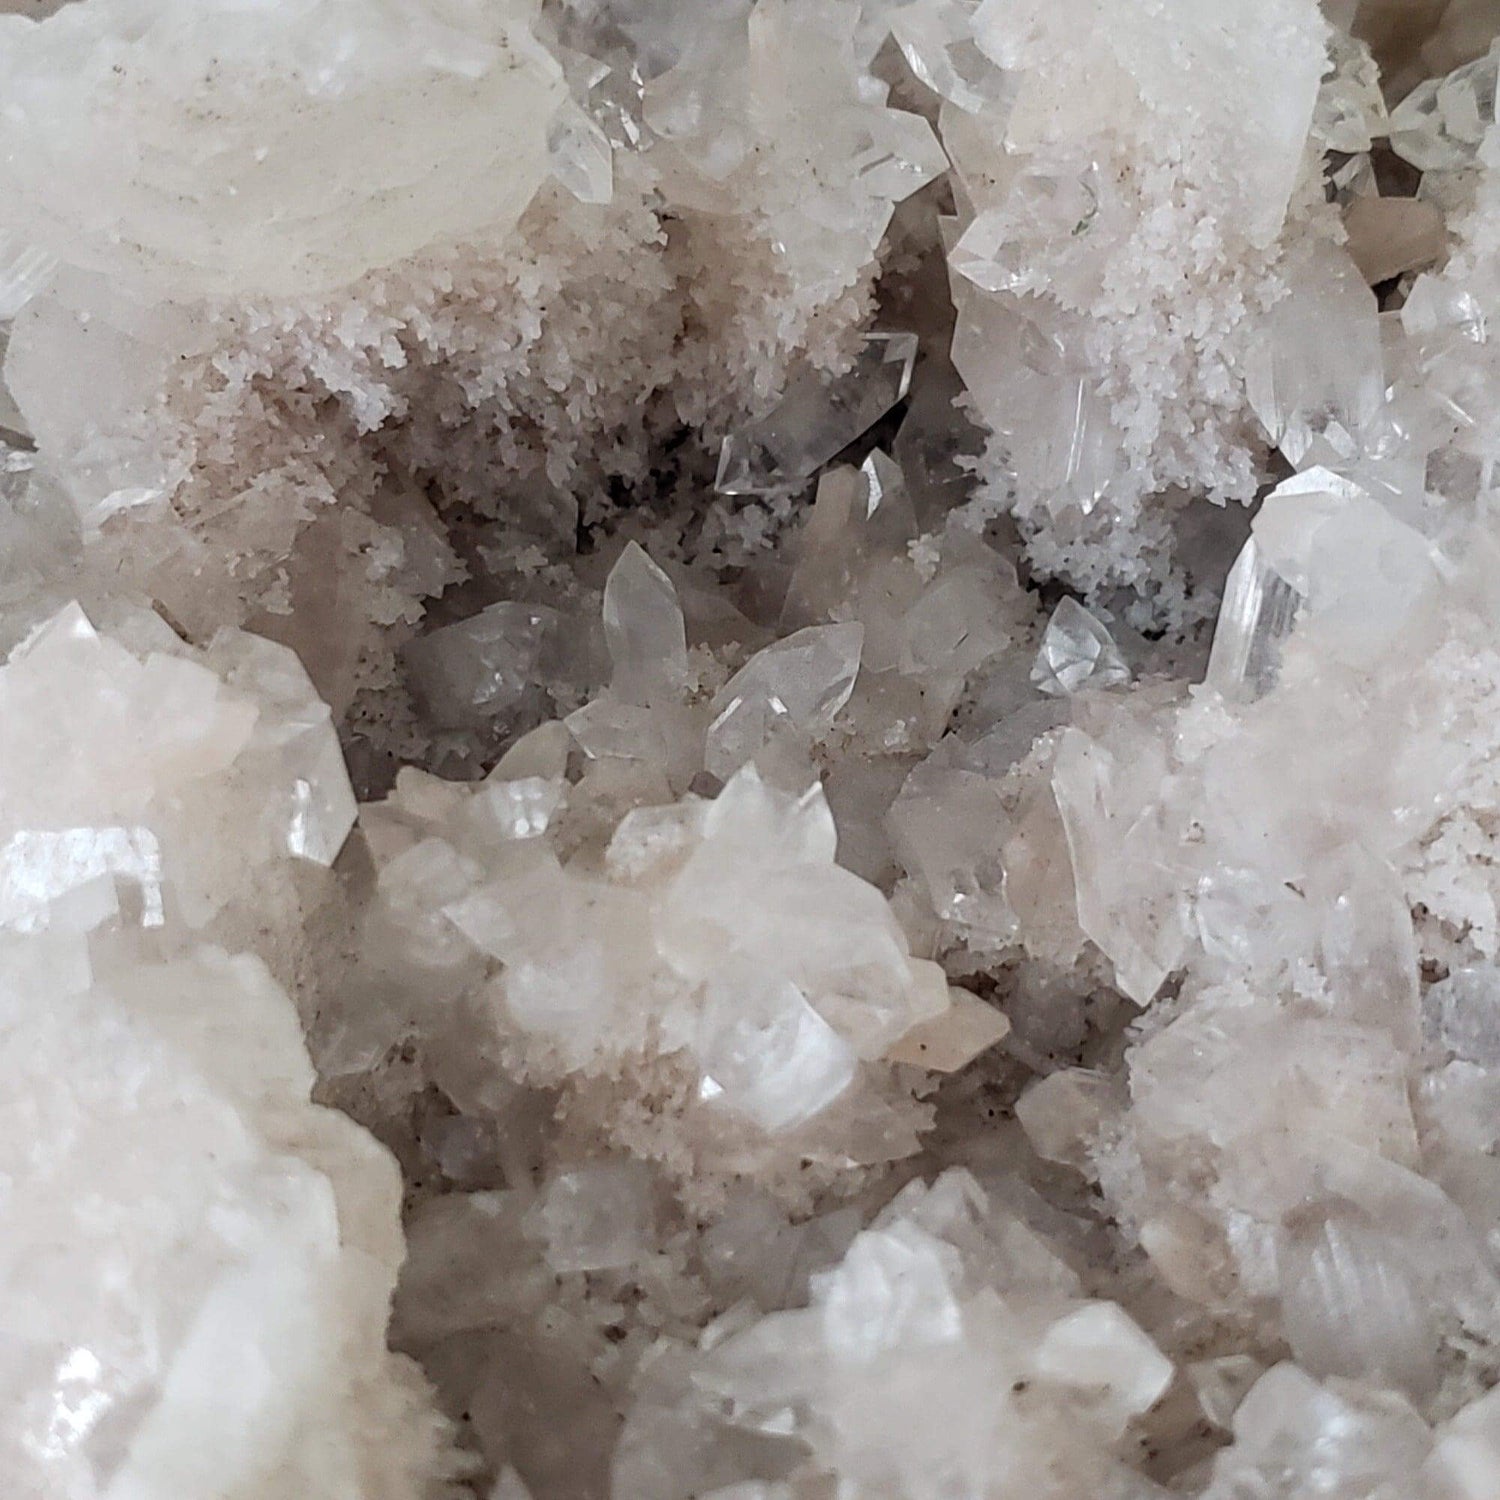 Apophyllite, Stilbite and Calcite on Chalcedony Druse | 2.46 kg | Jalgaon, India